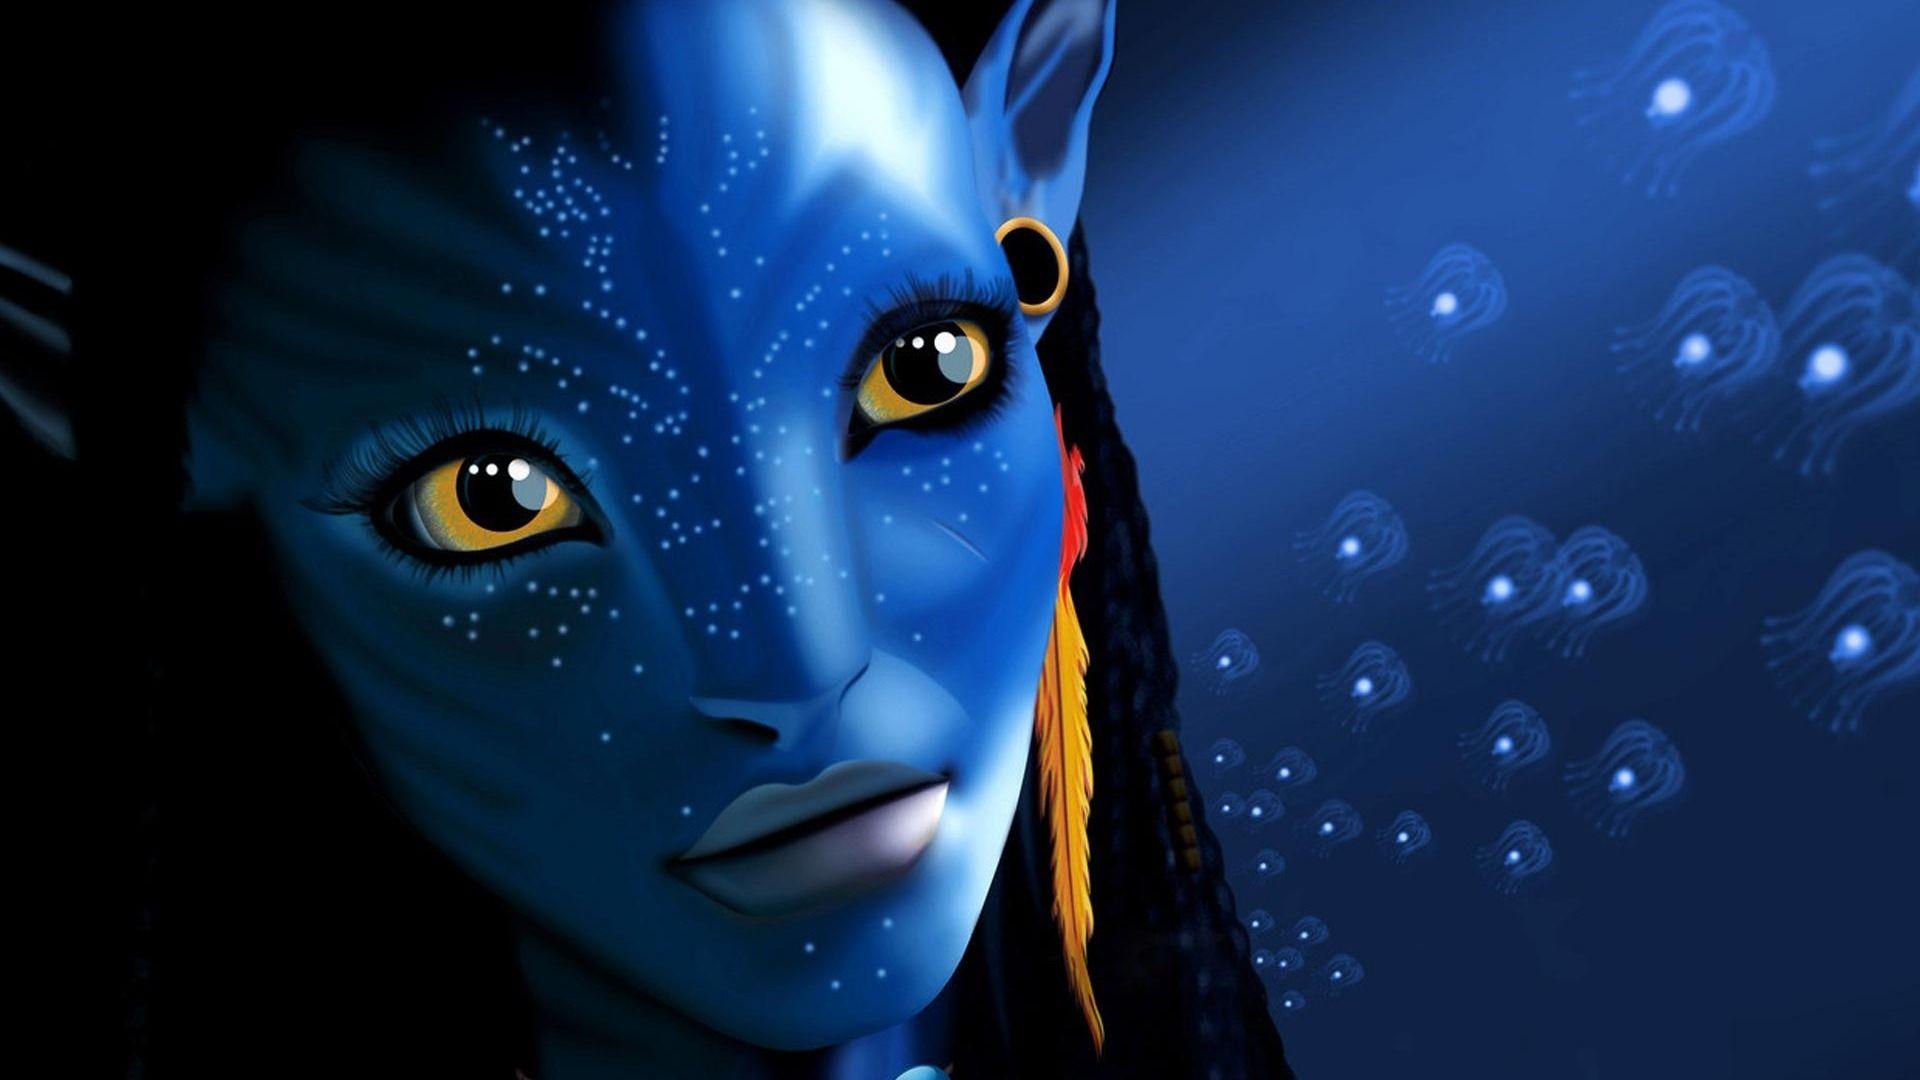 wallpaper #avatar #avatar2. Avatar quotes, Avatar image